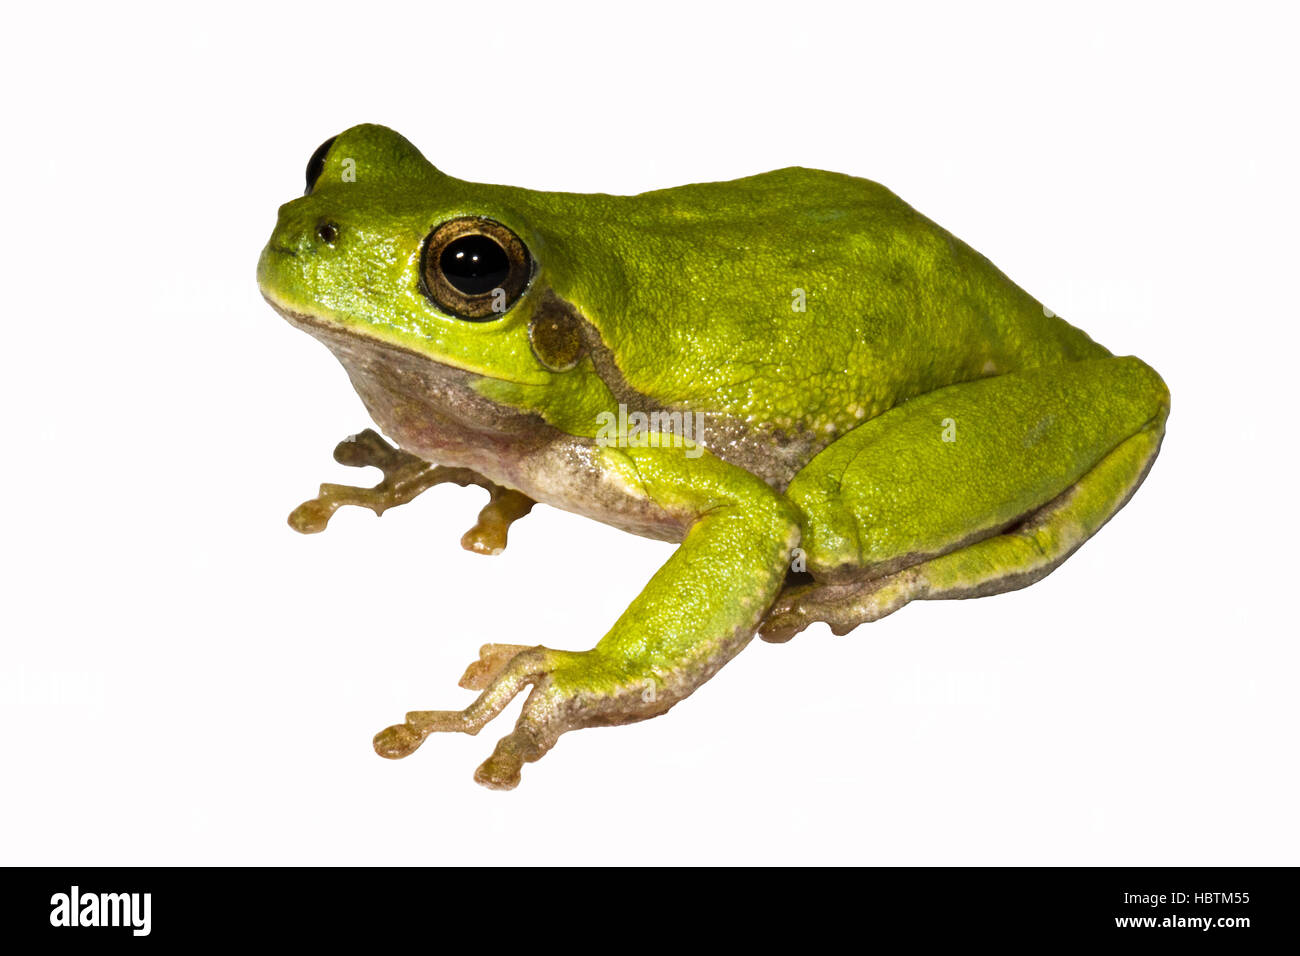 tyrrhenian tree frog Stock Photo